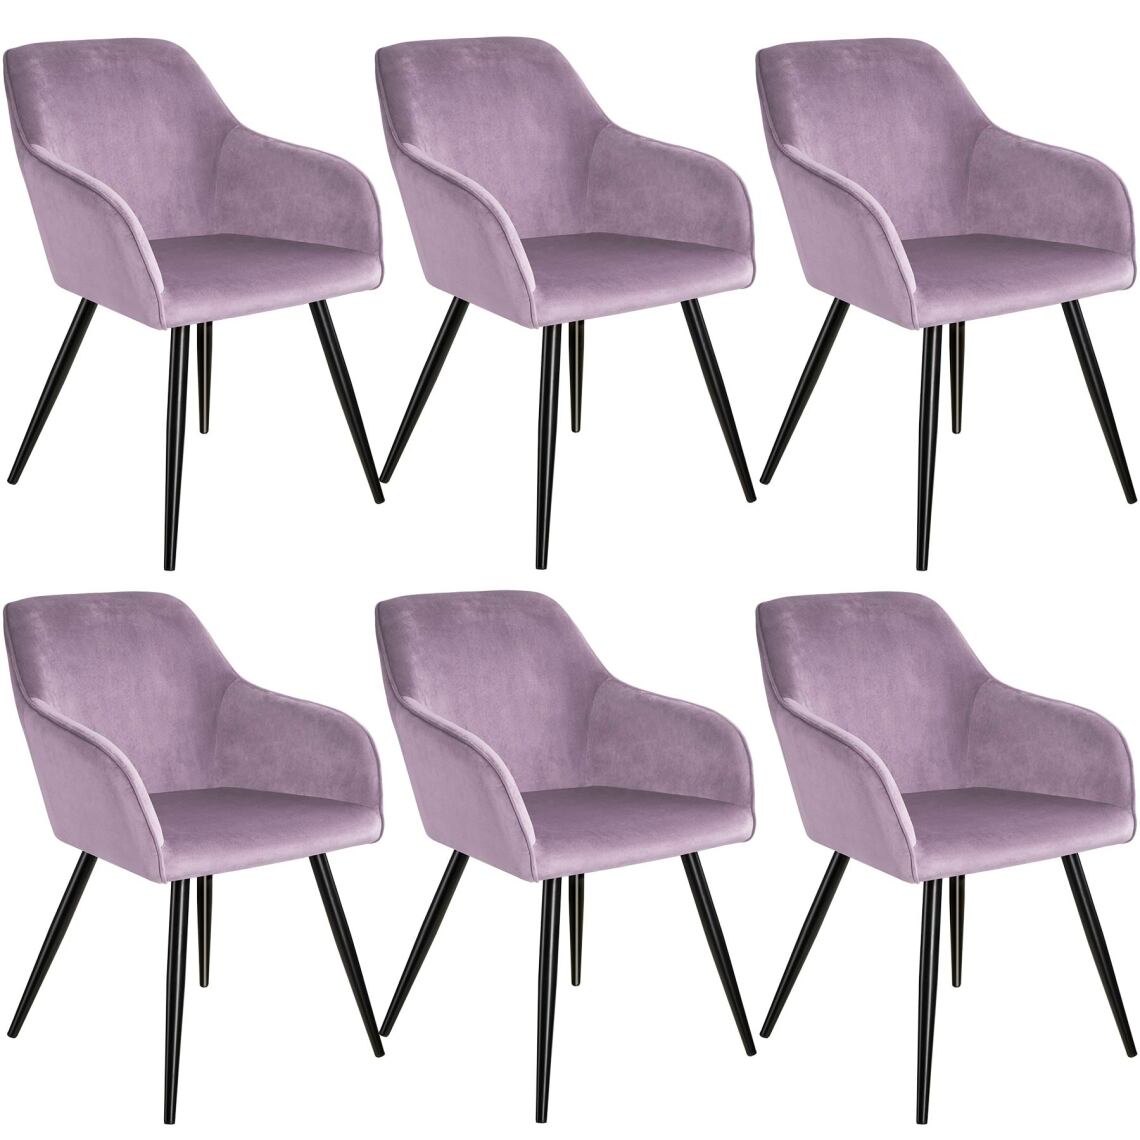 Tectake - 6 Chaises MARILYN Design en Velours Style Scandinave - violet clair/noir - Chaises